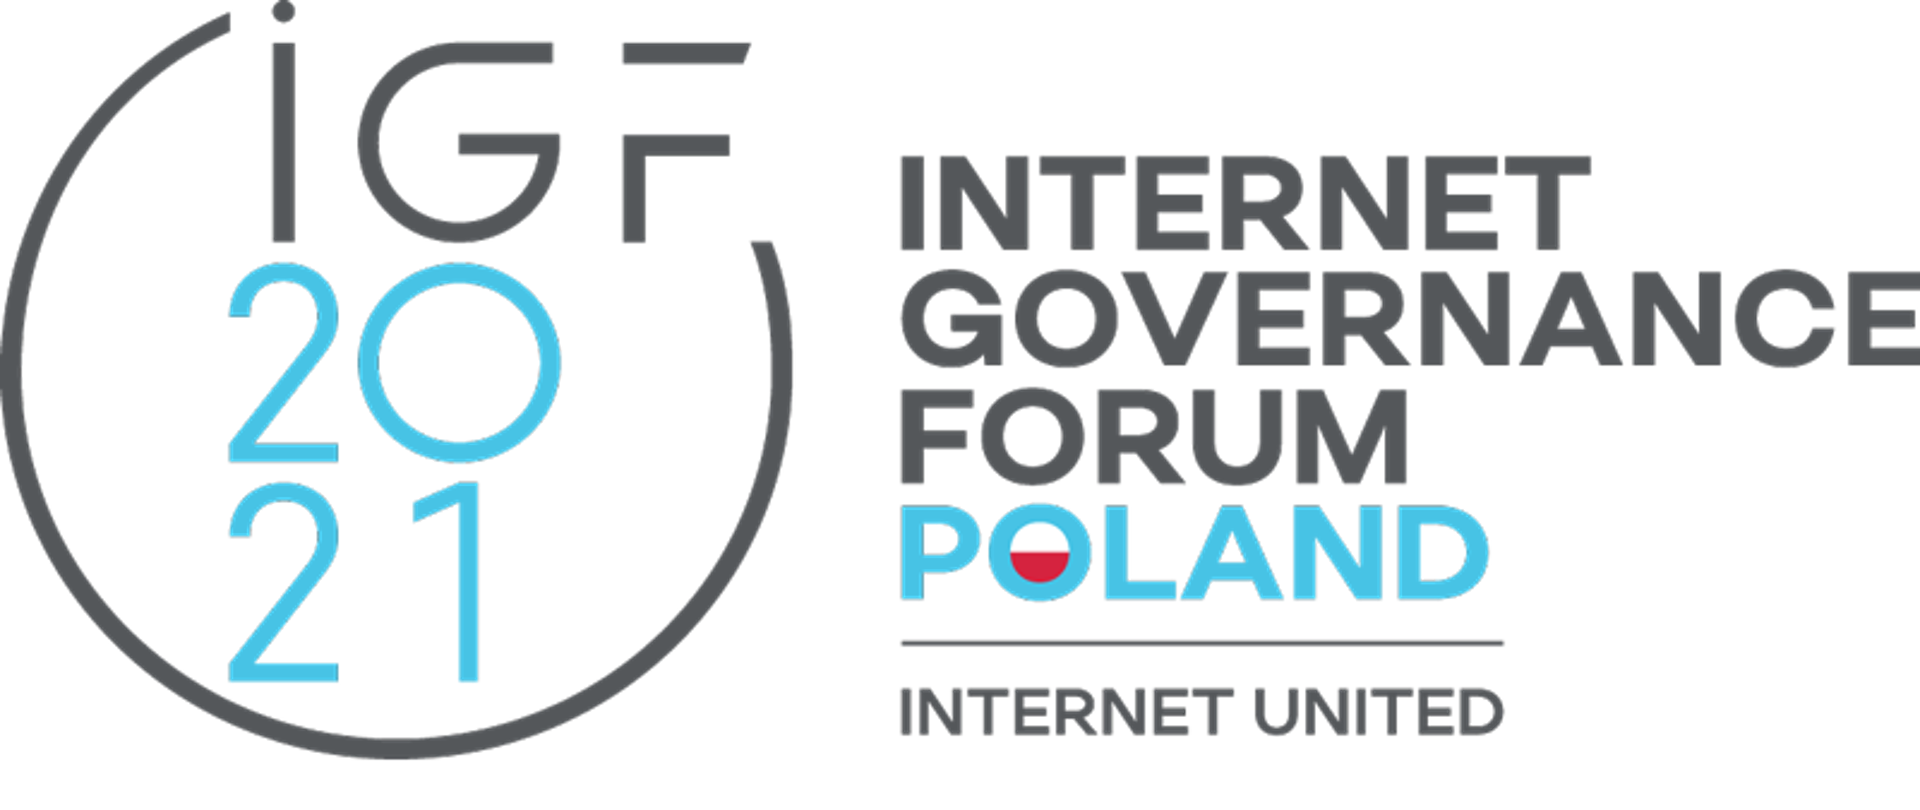 The photo shows the Internet Governance Forum IGF 2021 logotype